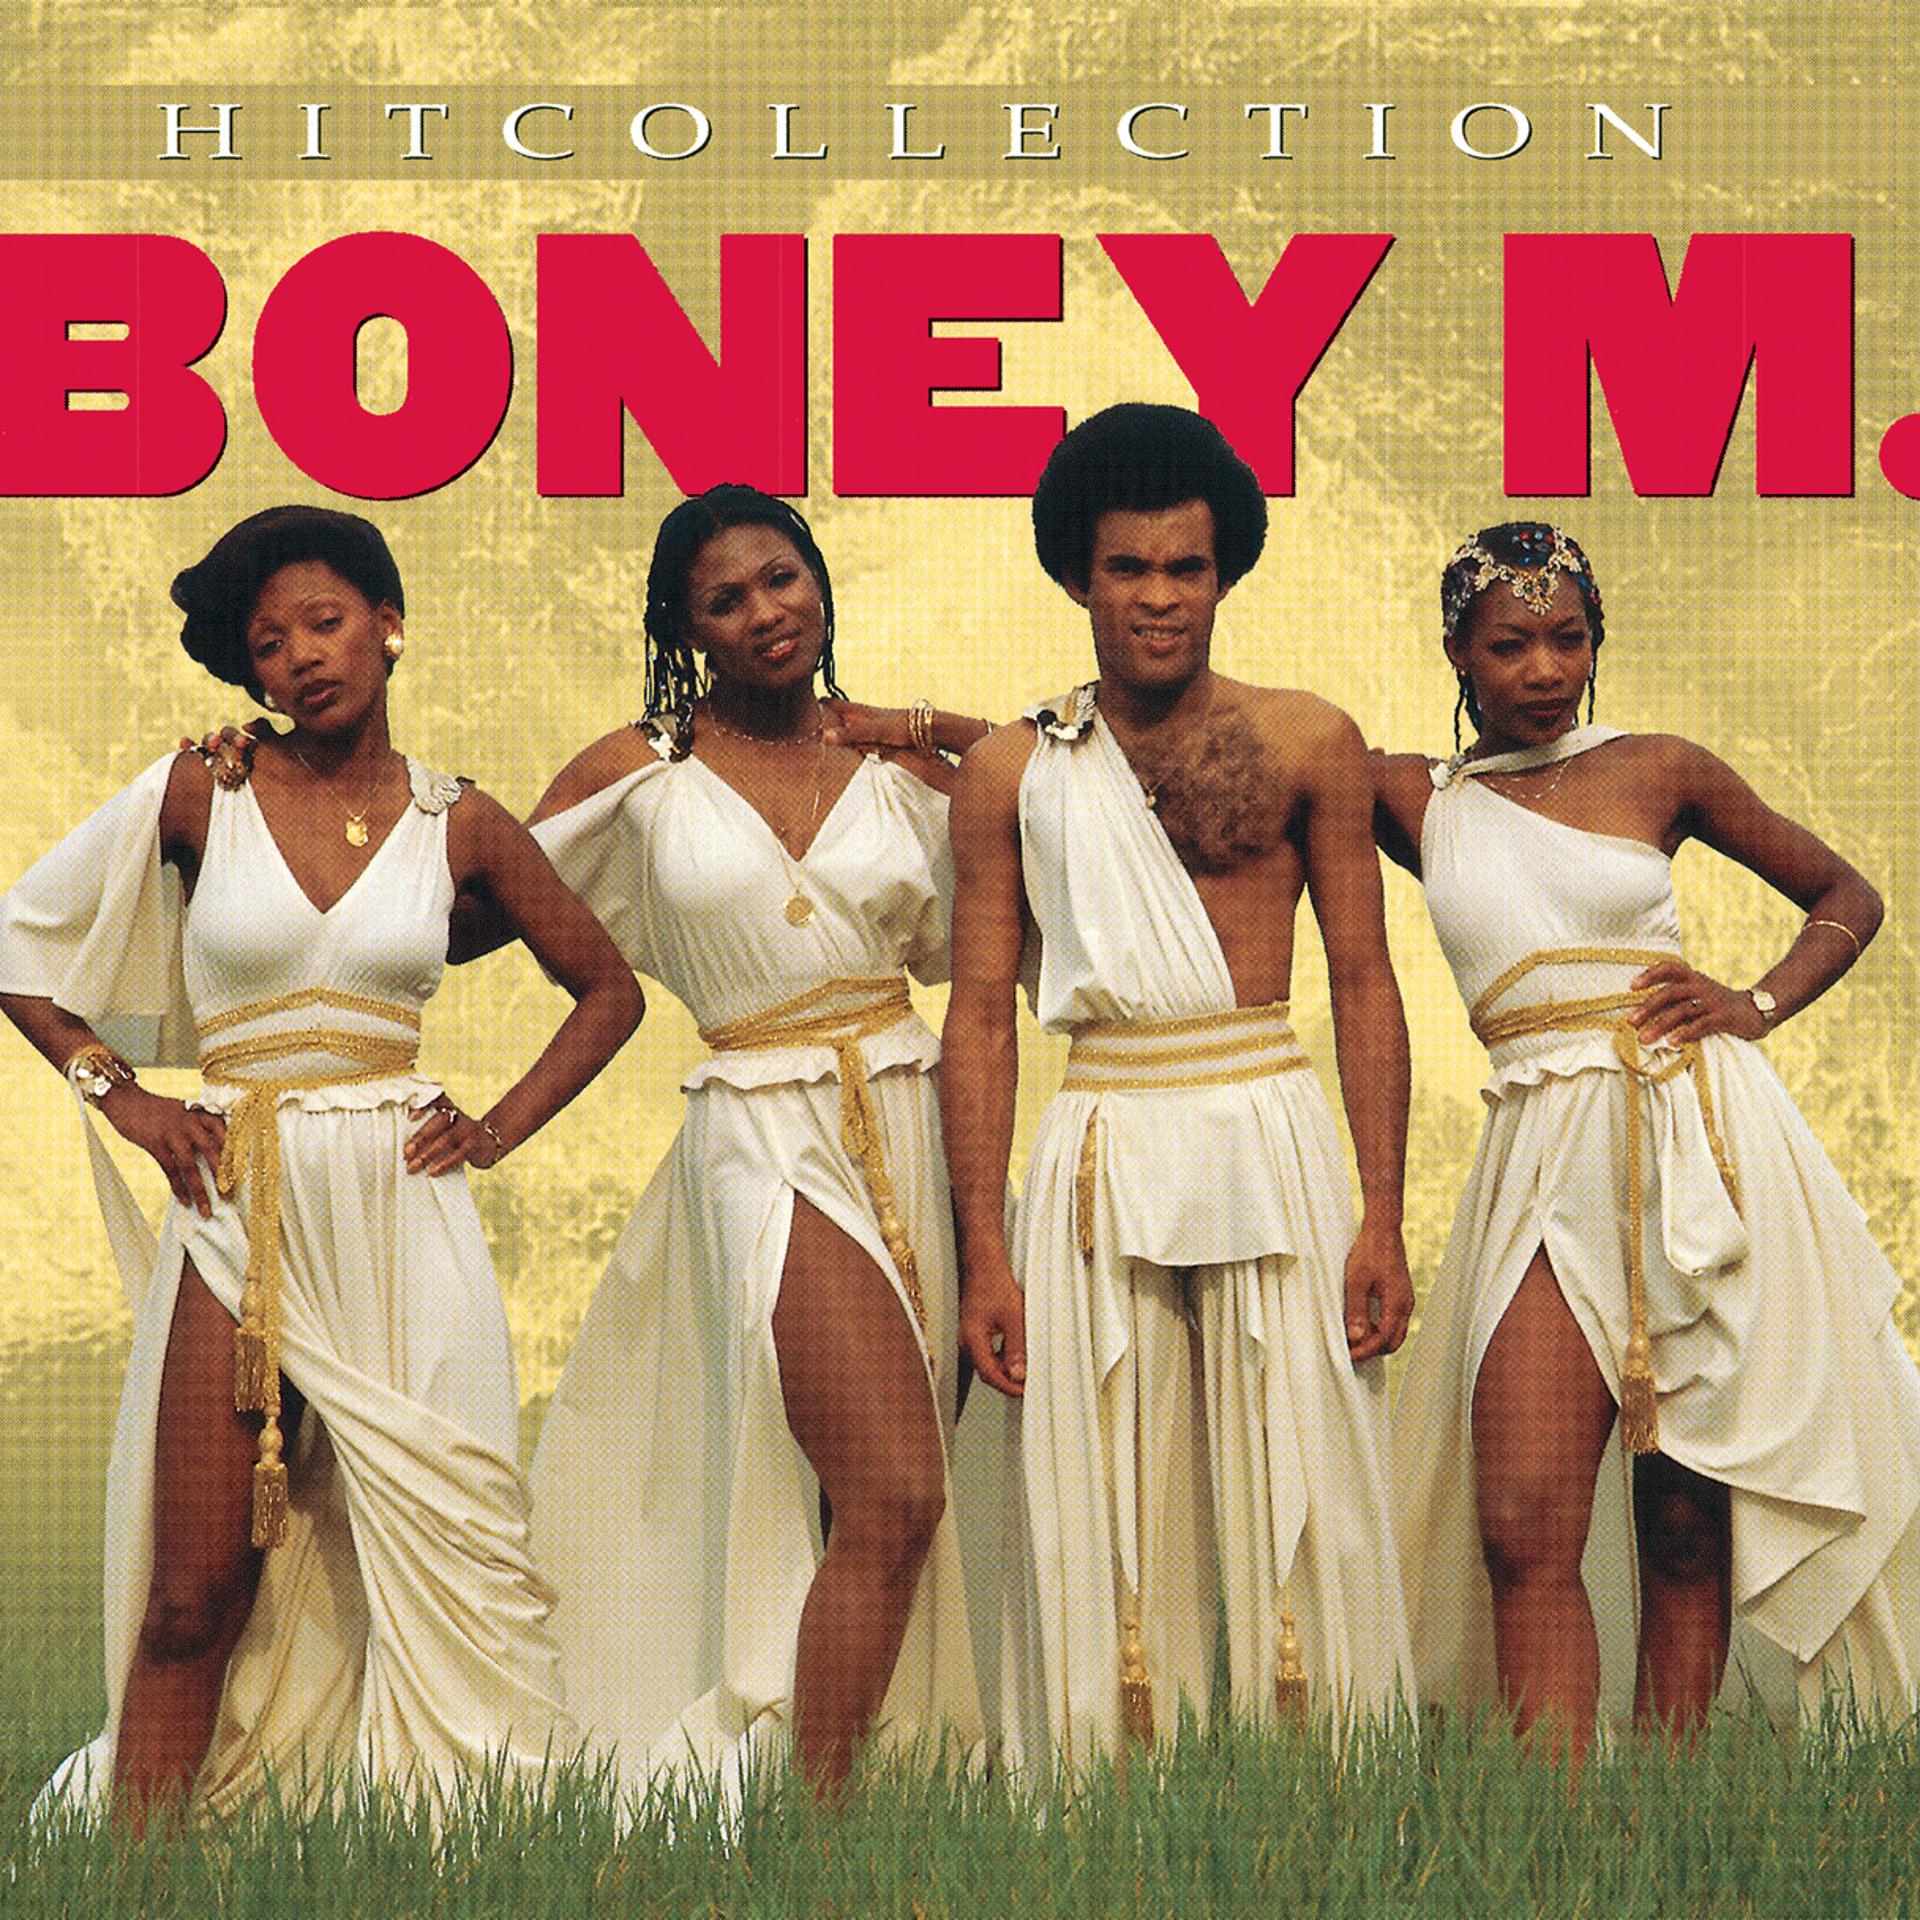 Музыка boney m. Группа Boney m.. Группа Boney m. в 80. Бони м ма Бейкер. Группа Бони м 1976.